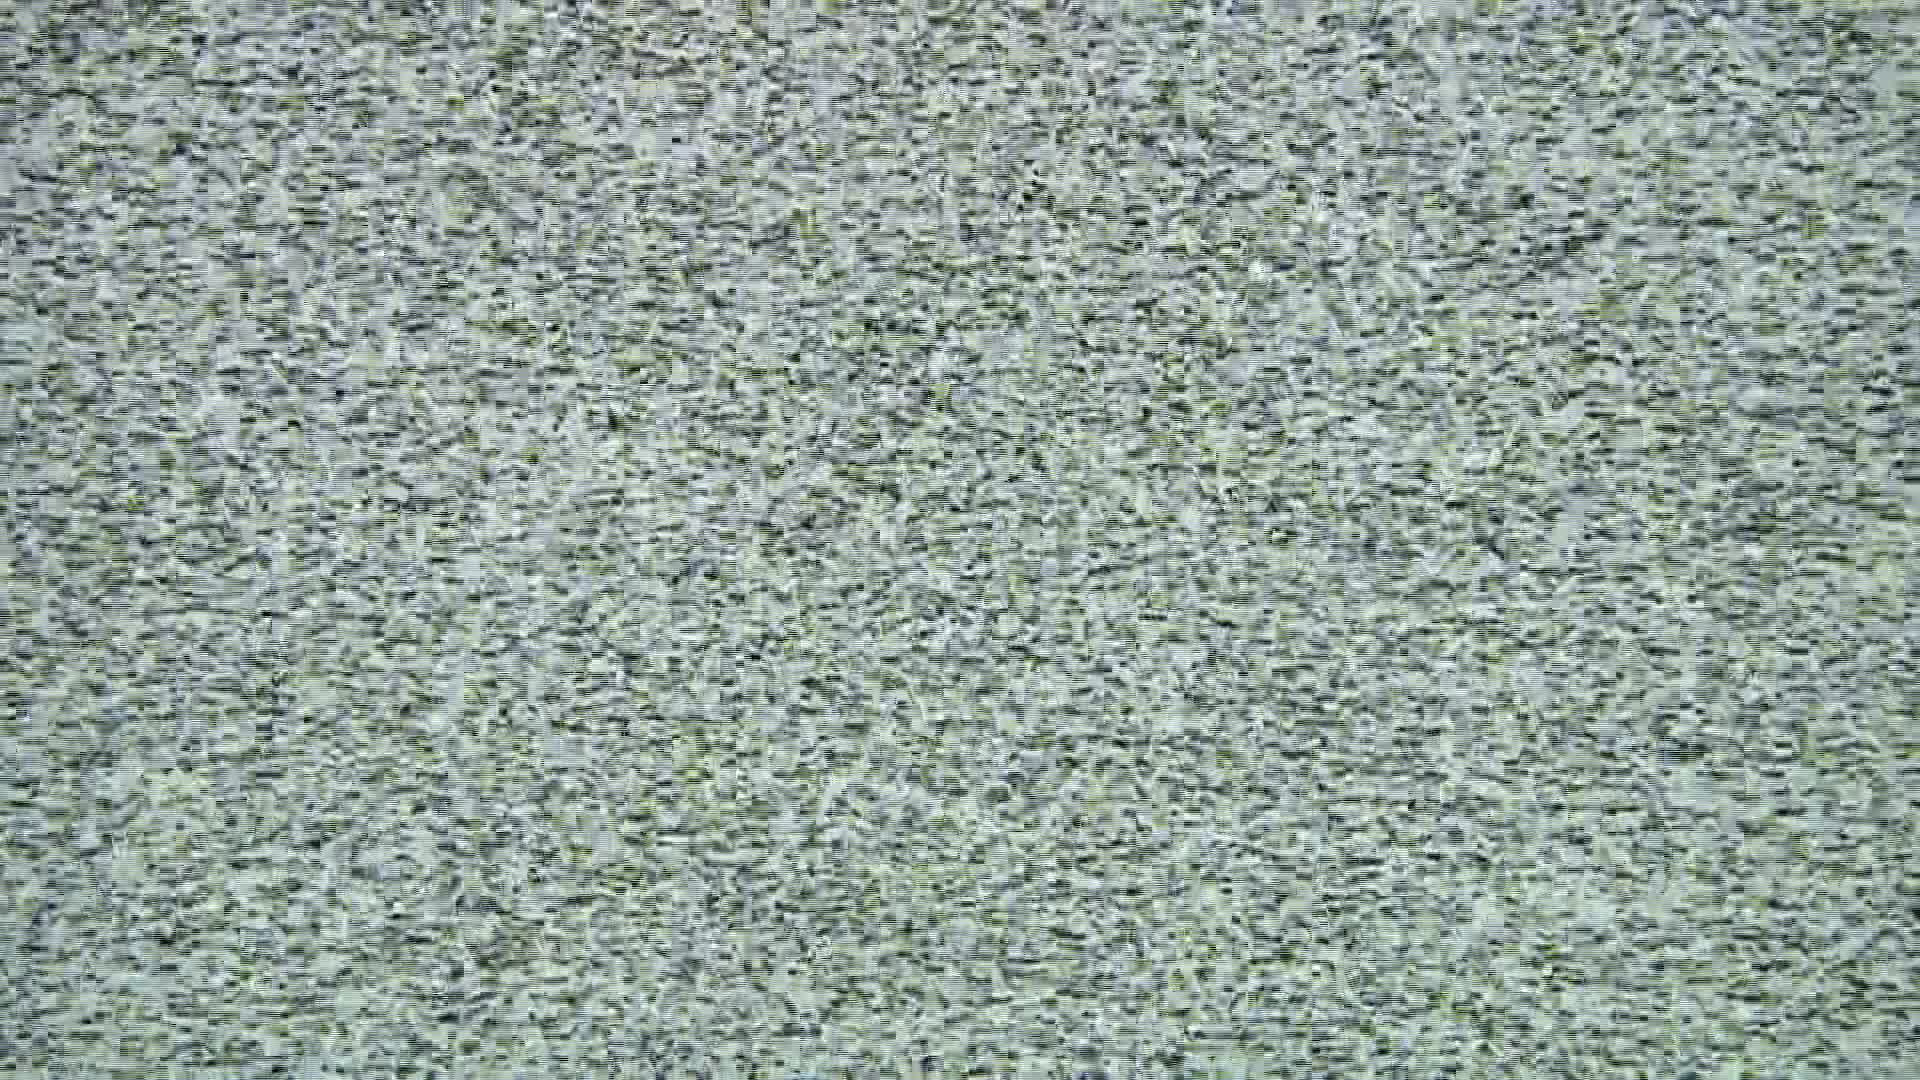 Tv Screen Static Wallpaper Blank Television